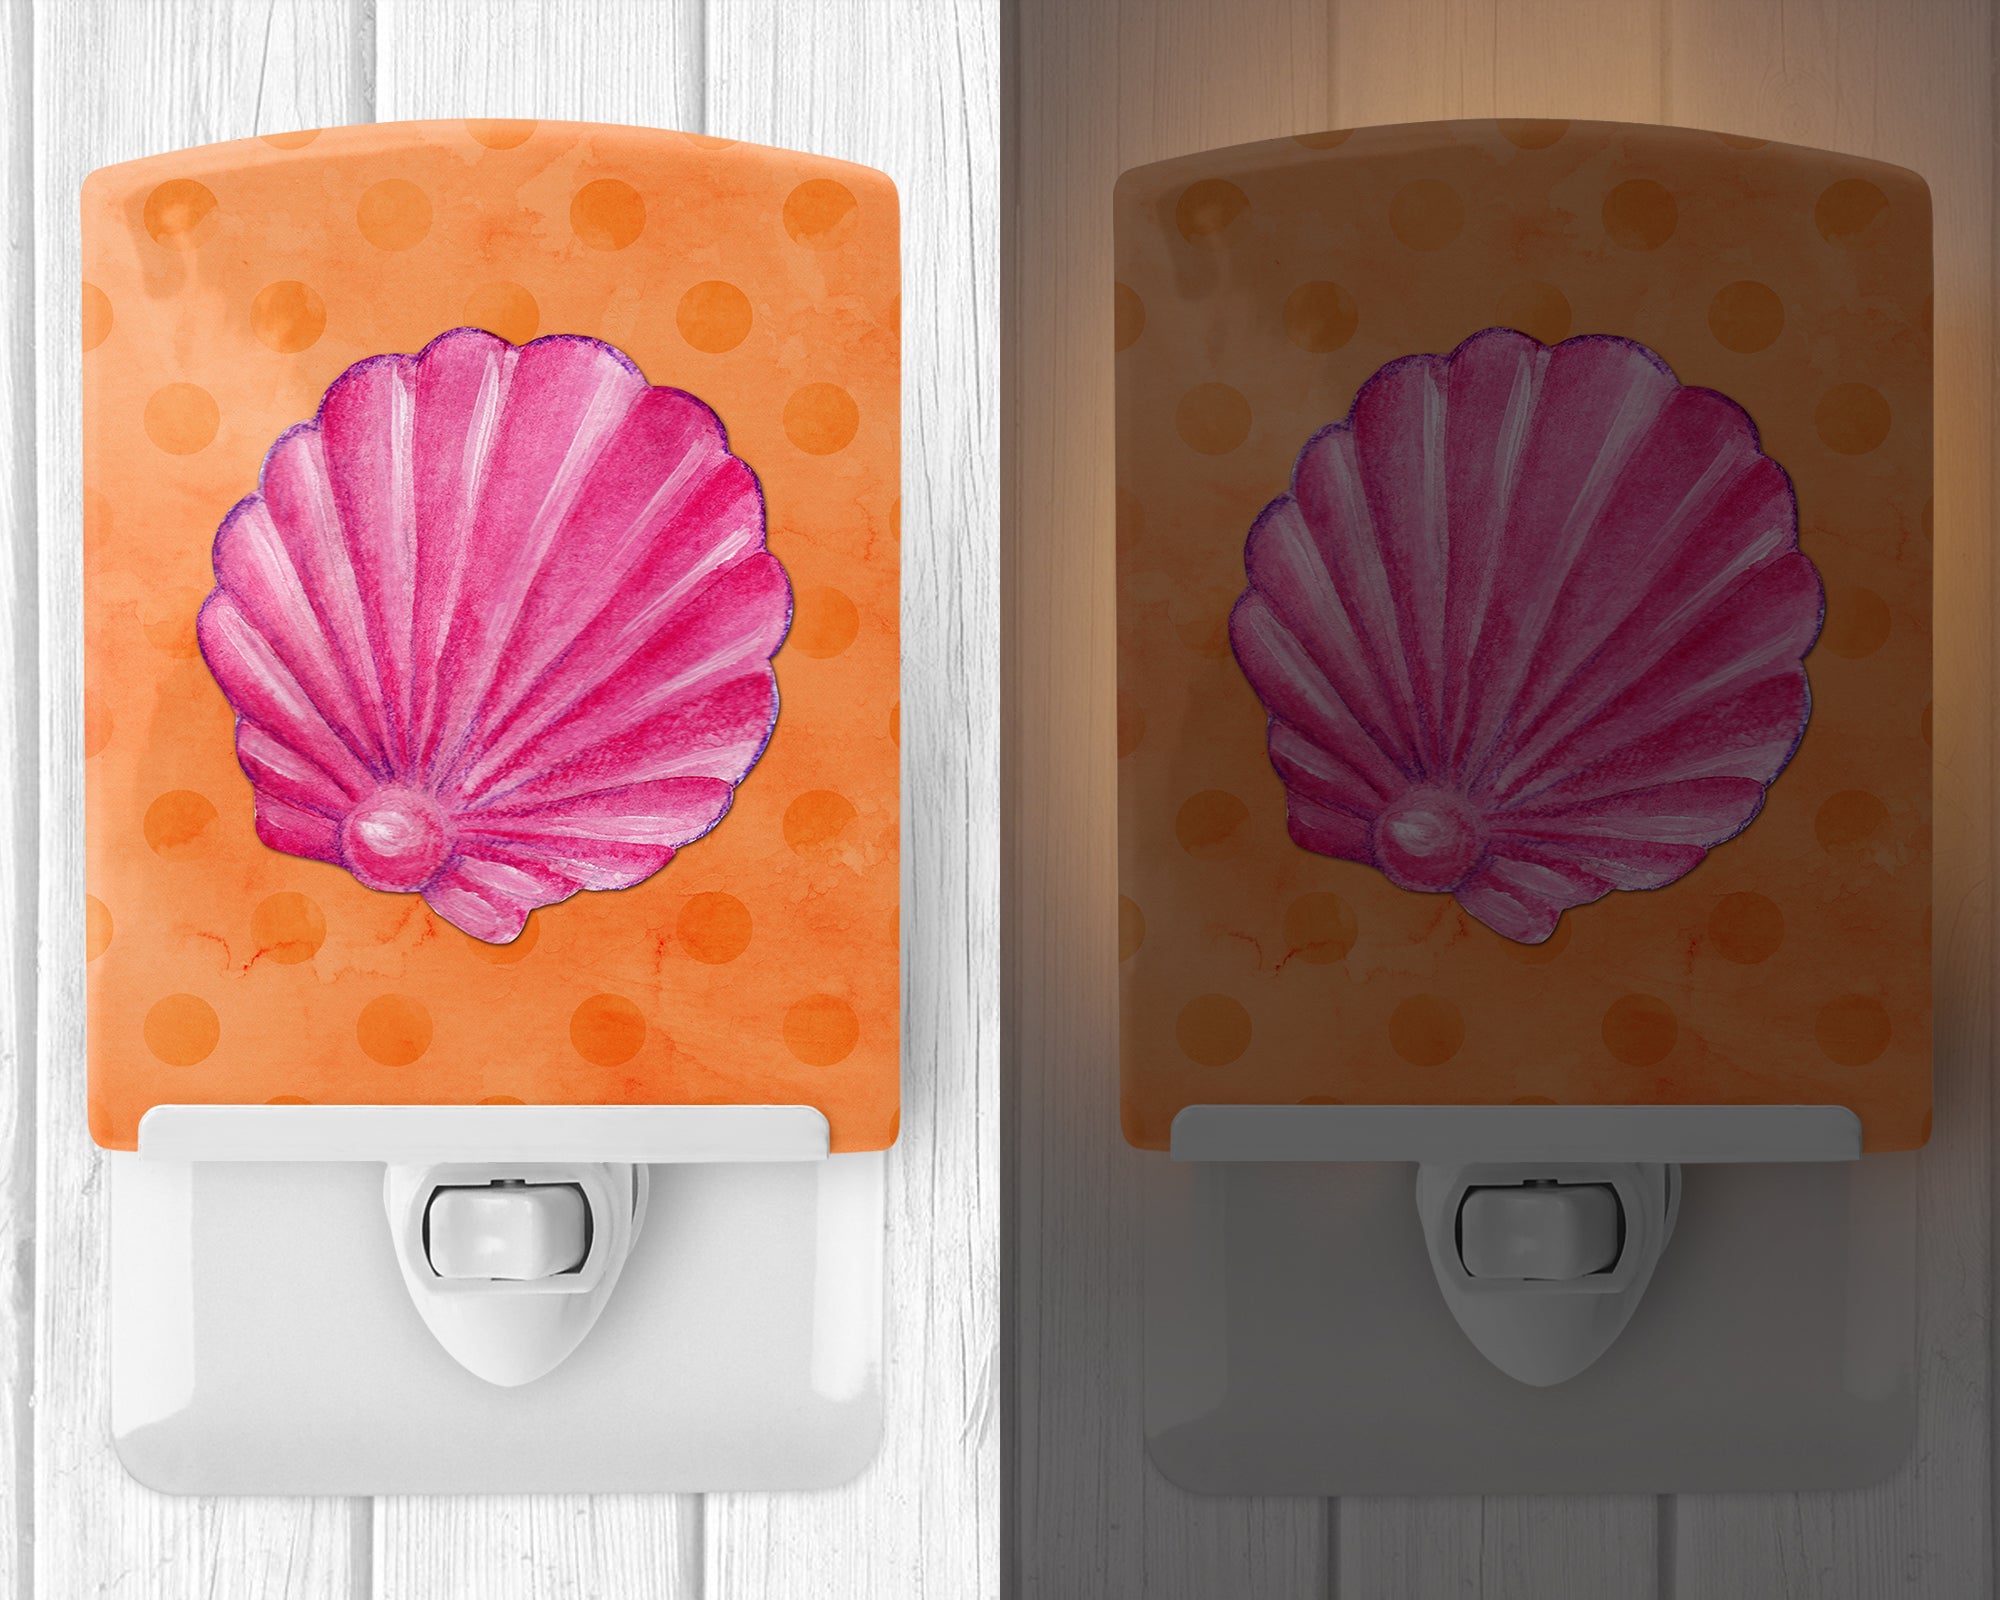 Pink Sea Shell Orange Polkadot Ceramic Night Light BB8243CNL - the-store.com